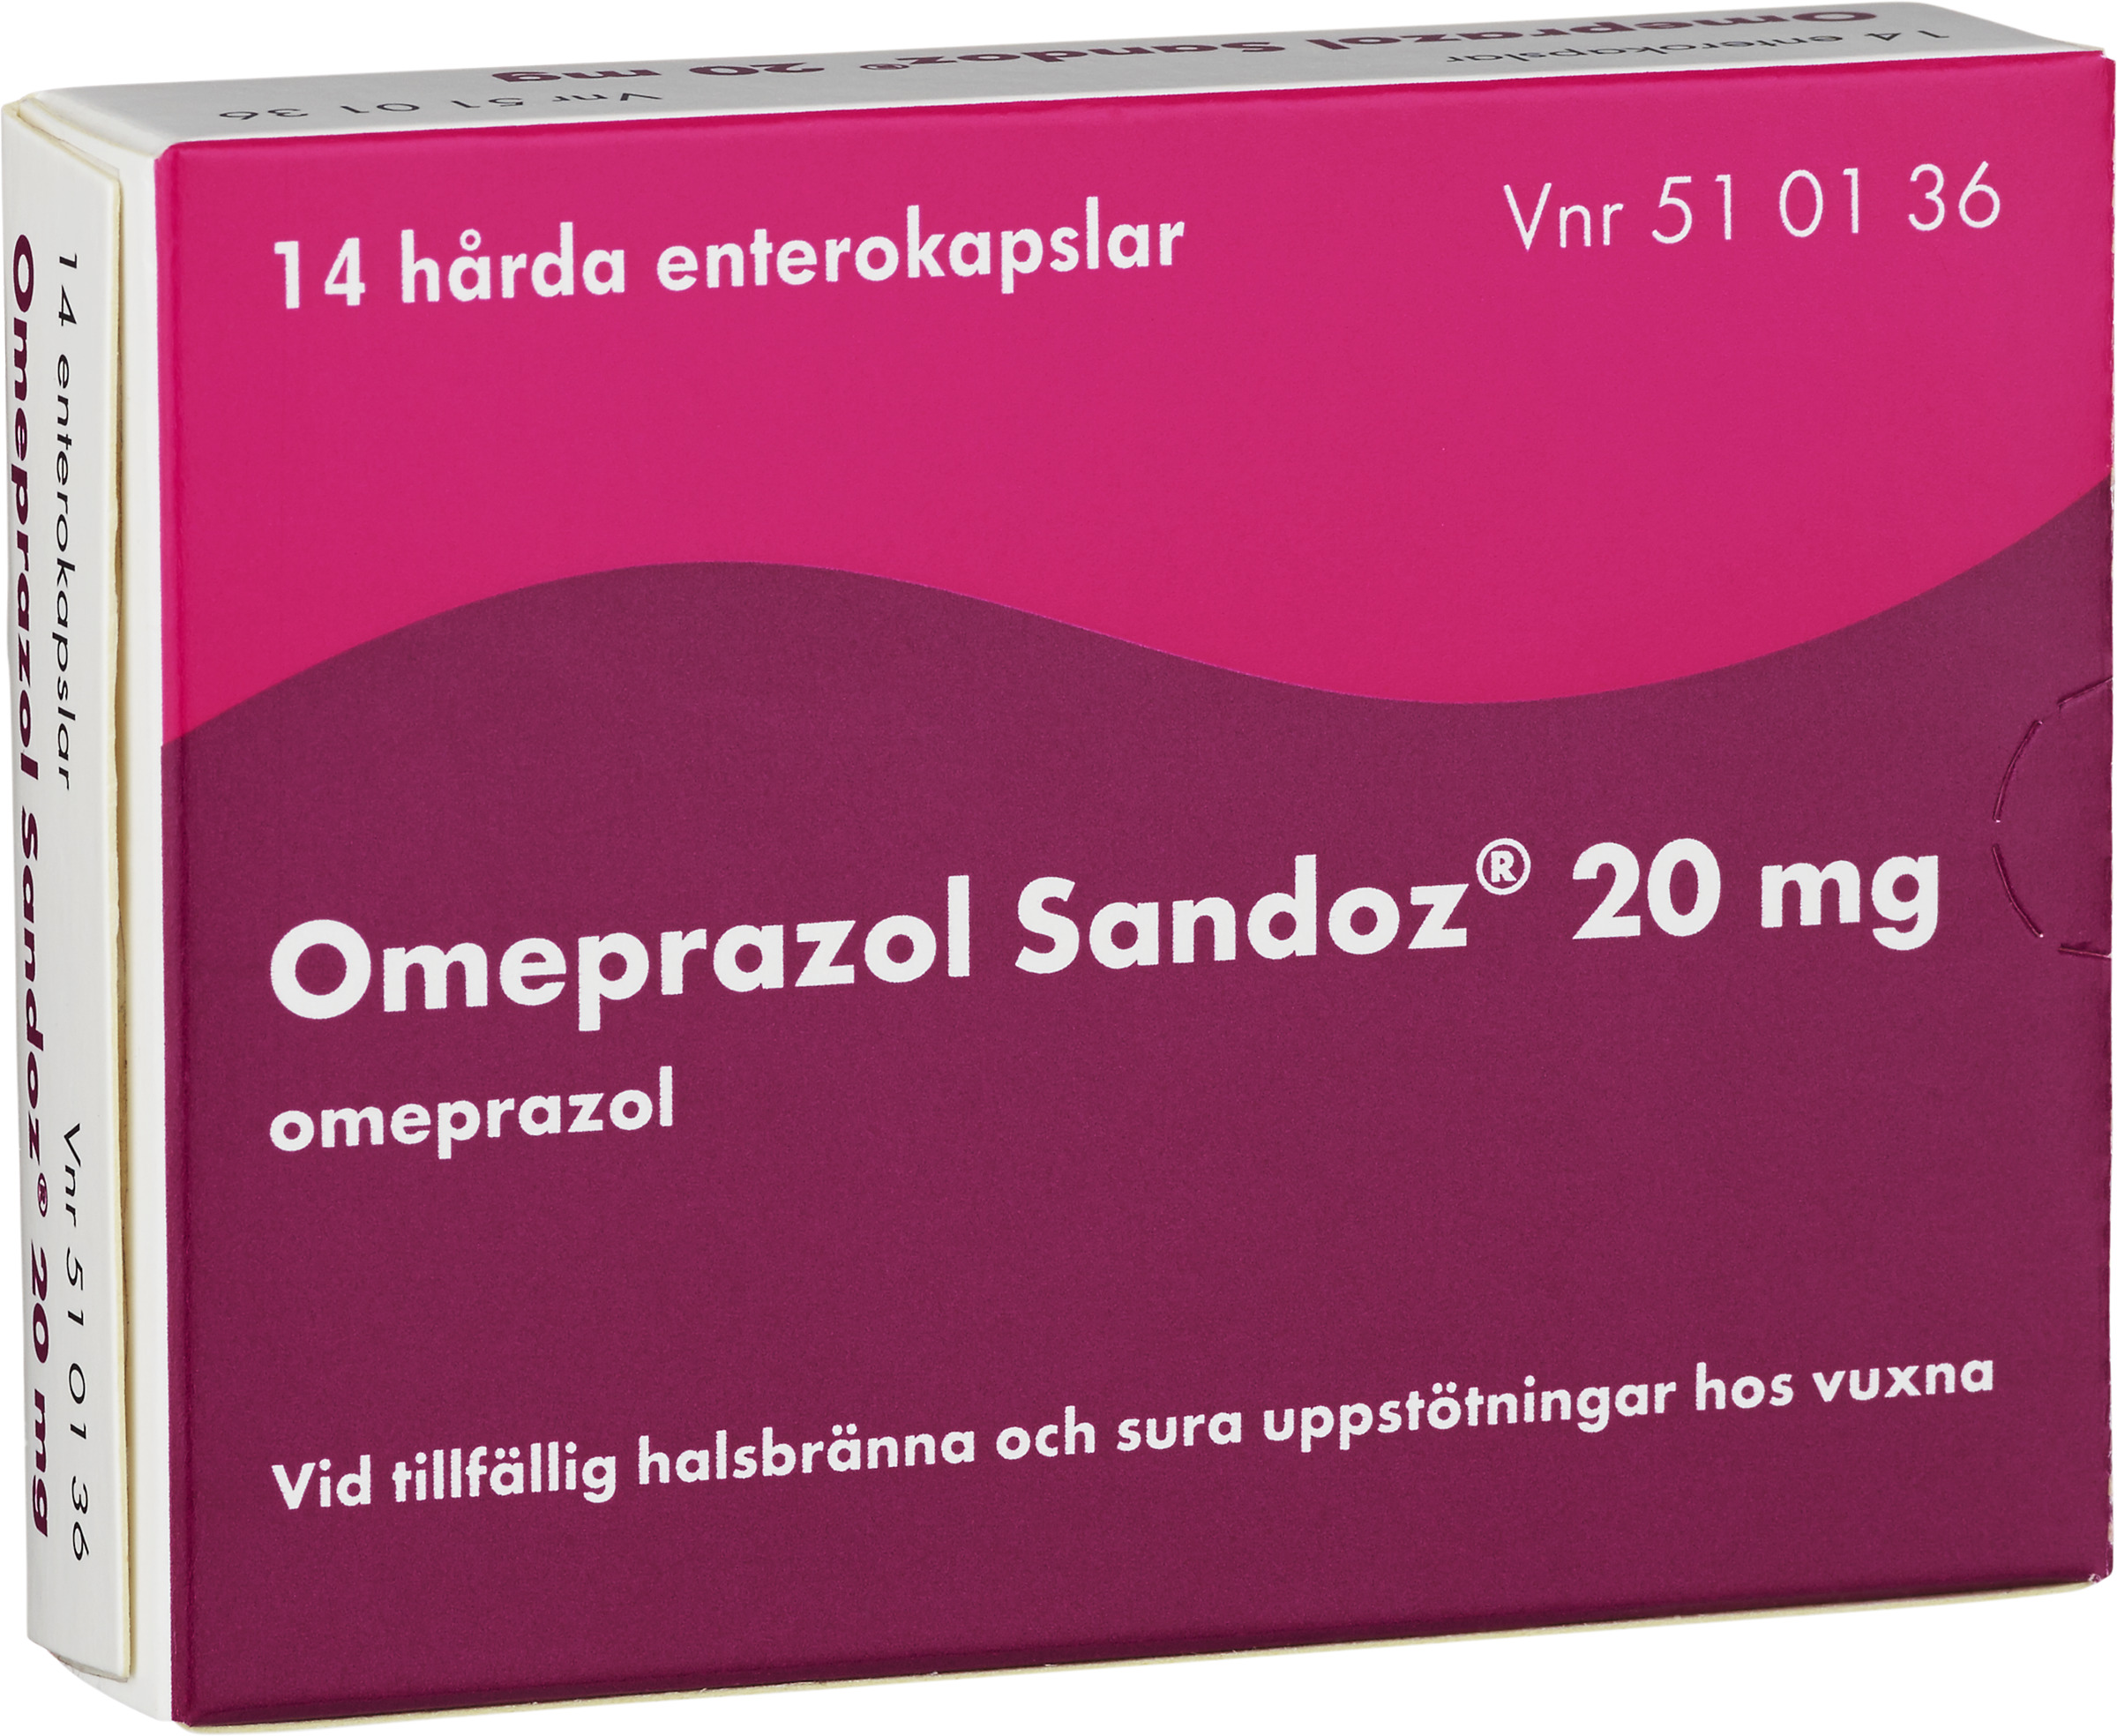 Omeprazol Sandoz enterokapsel 20 mg 14 st